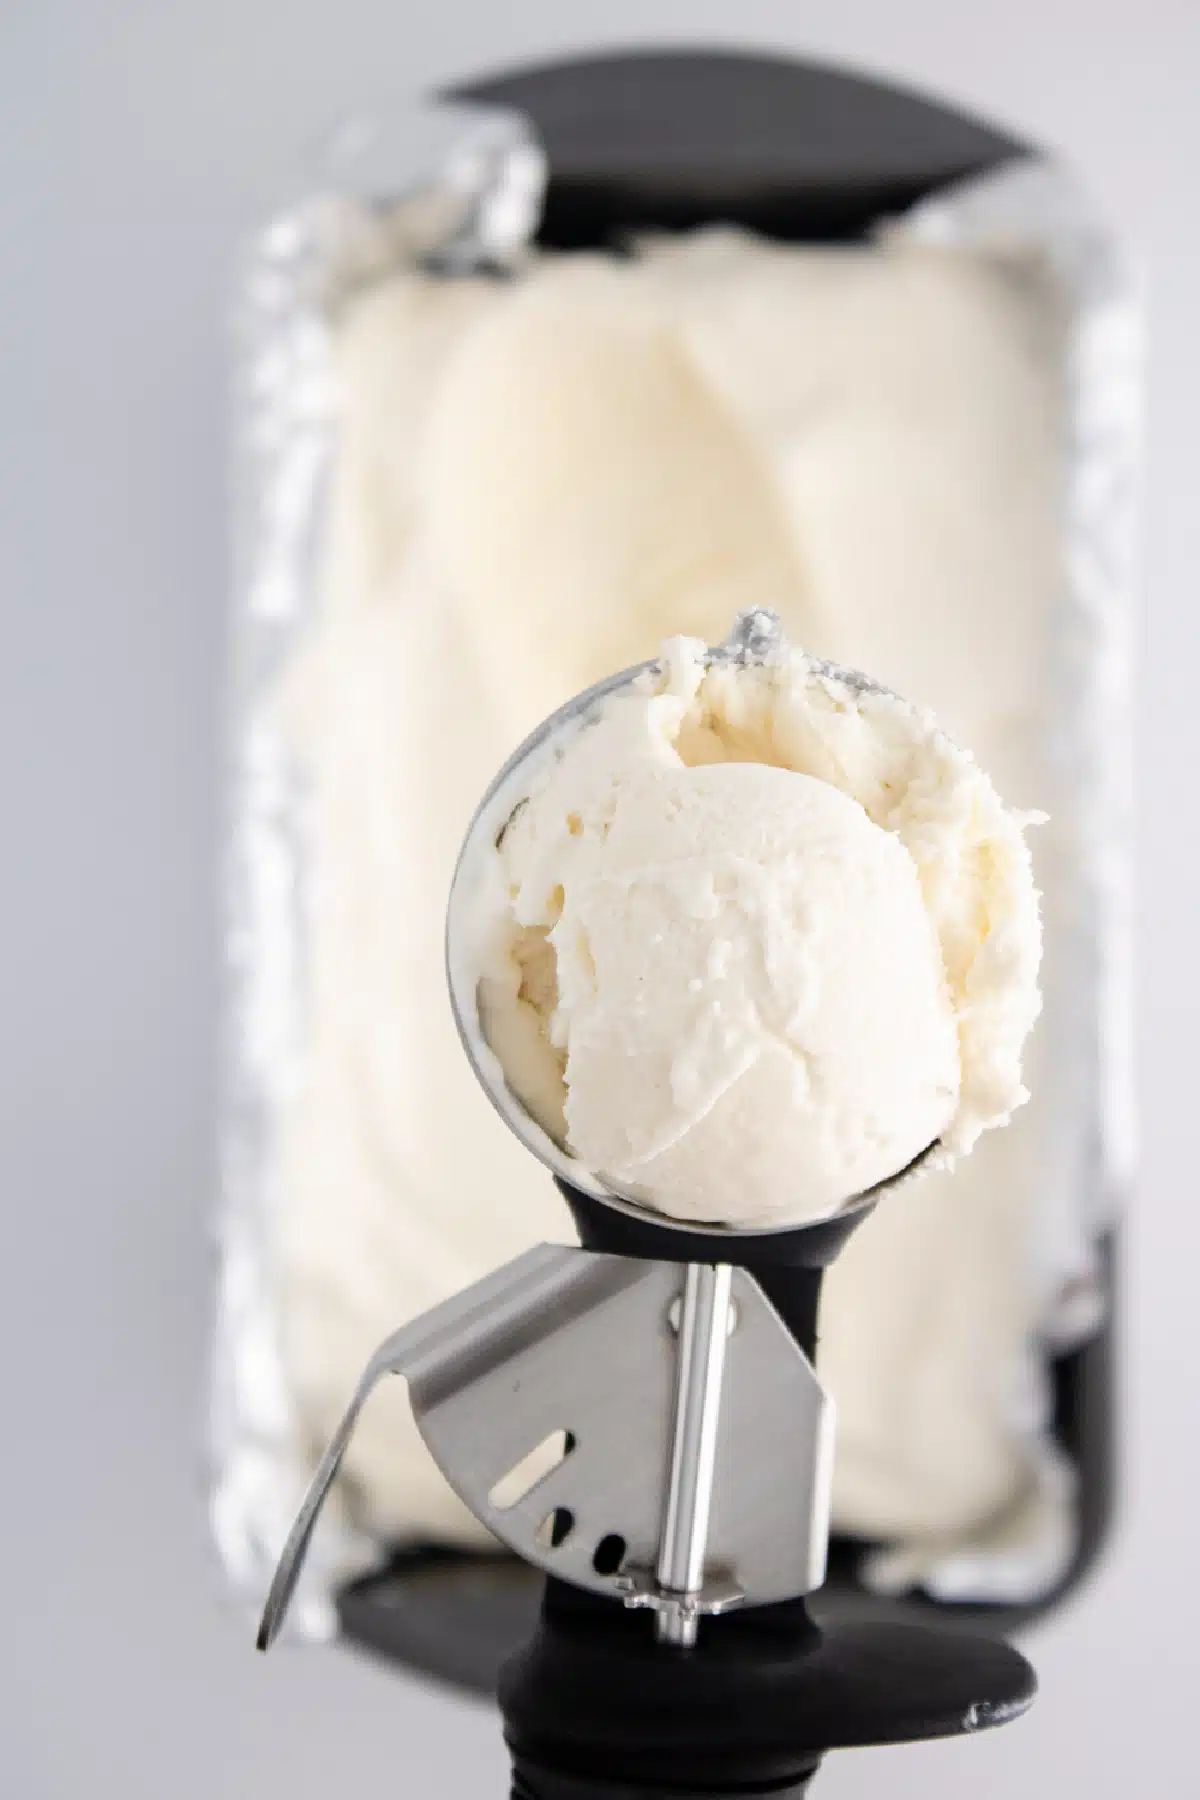 ice cream scooper of vanilla bean ice cream